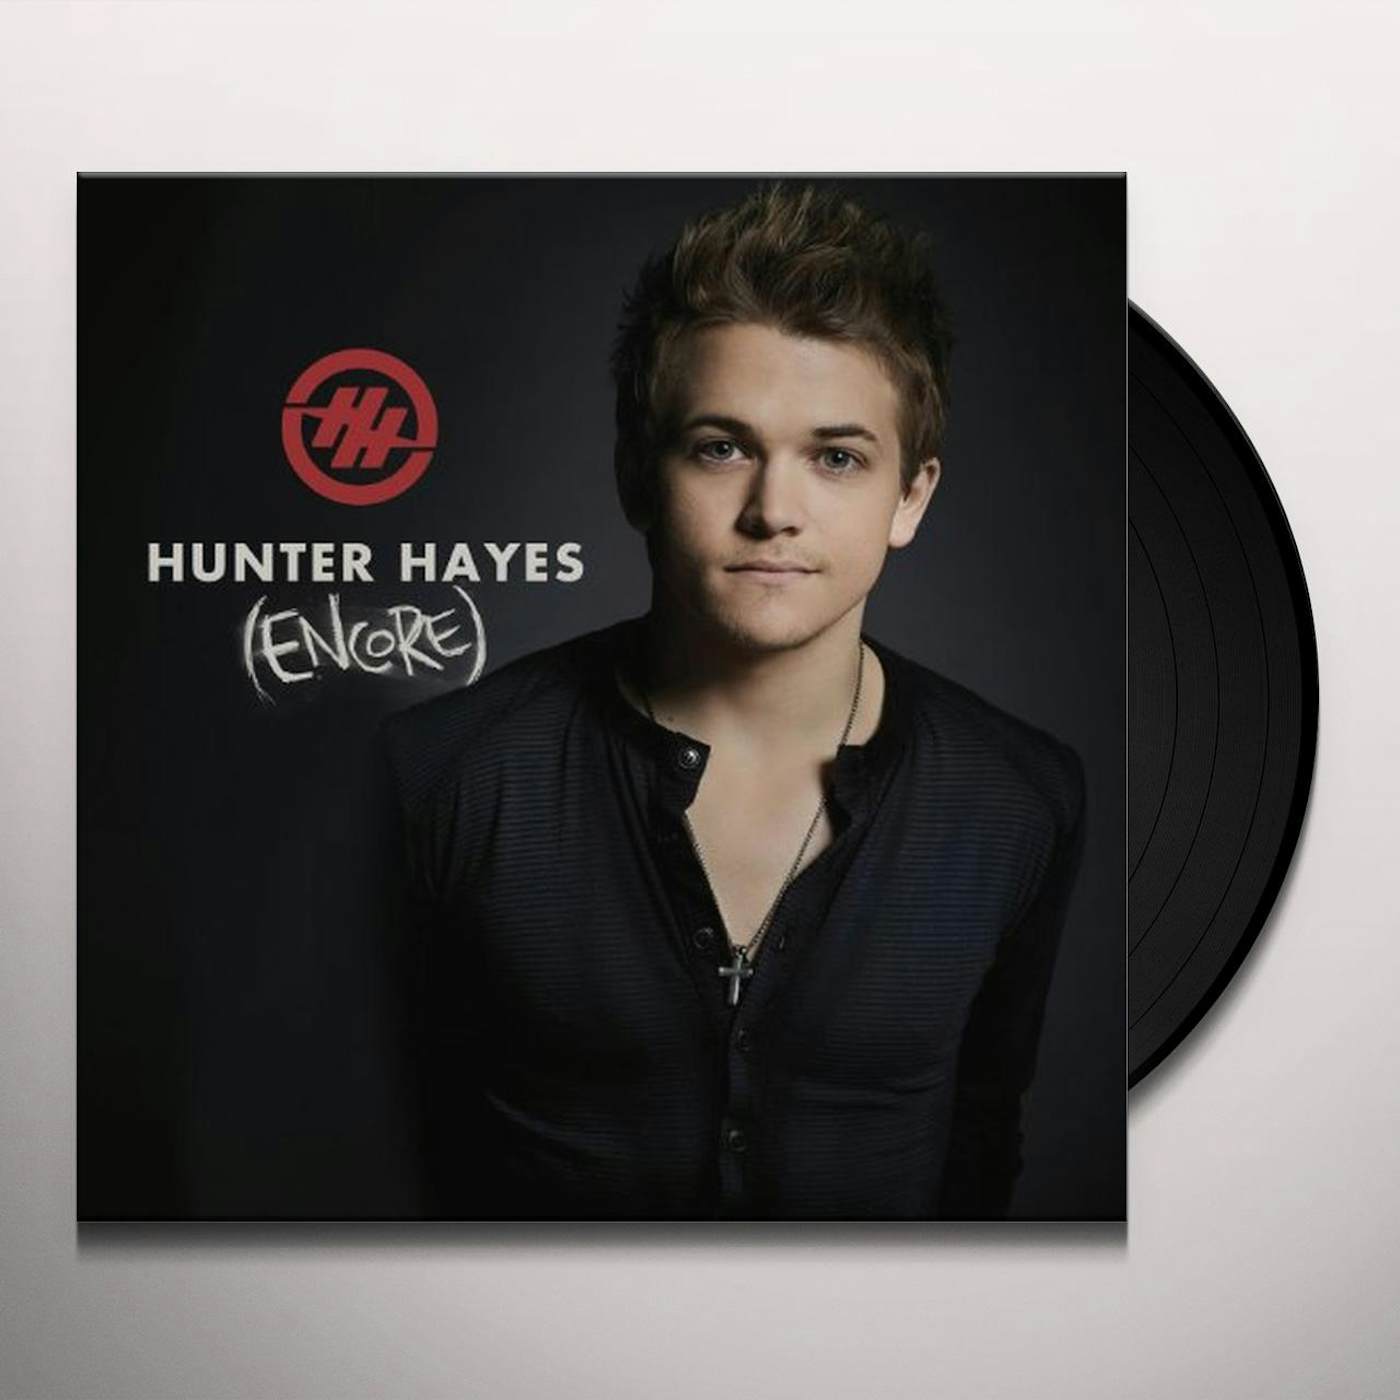 HUNTER HAYES (ENCORE) Vinyl Record - 180 Gram Pressing